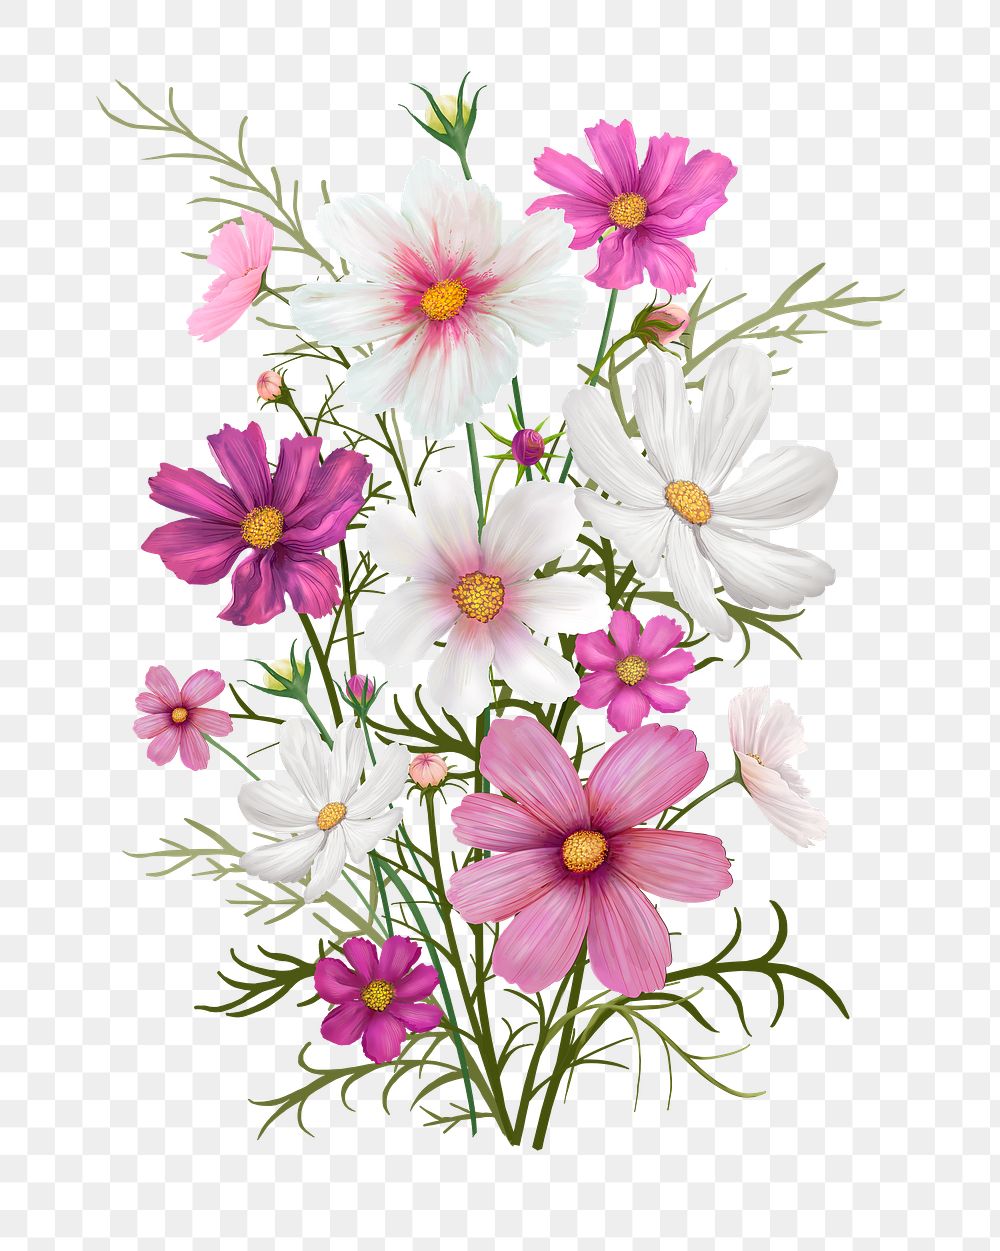 Daisy png flower sticker illustration, transparent background